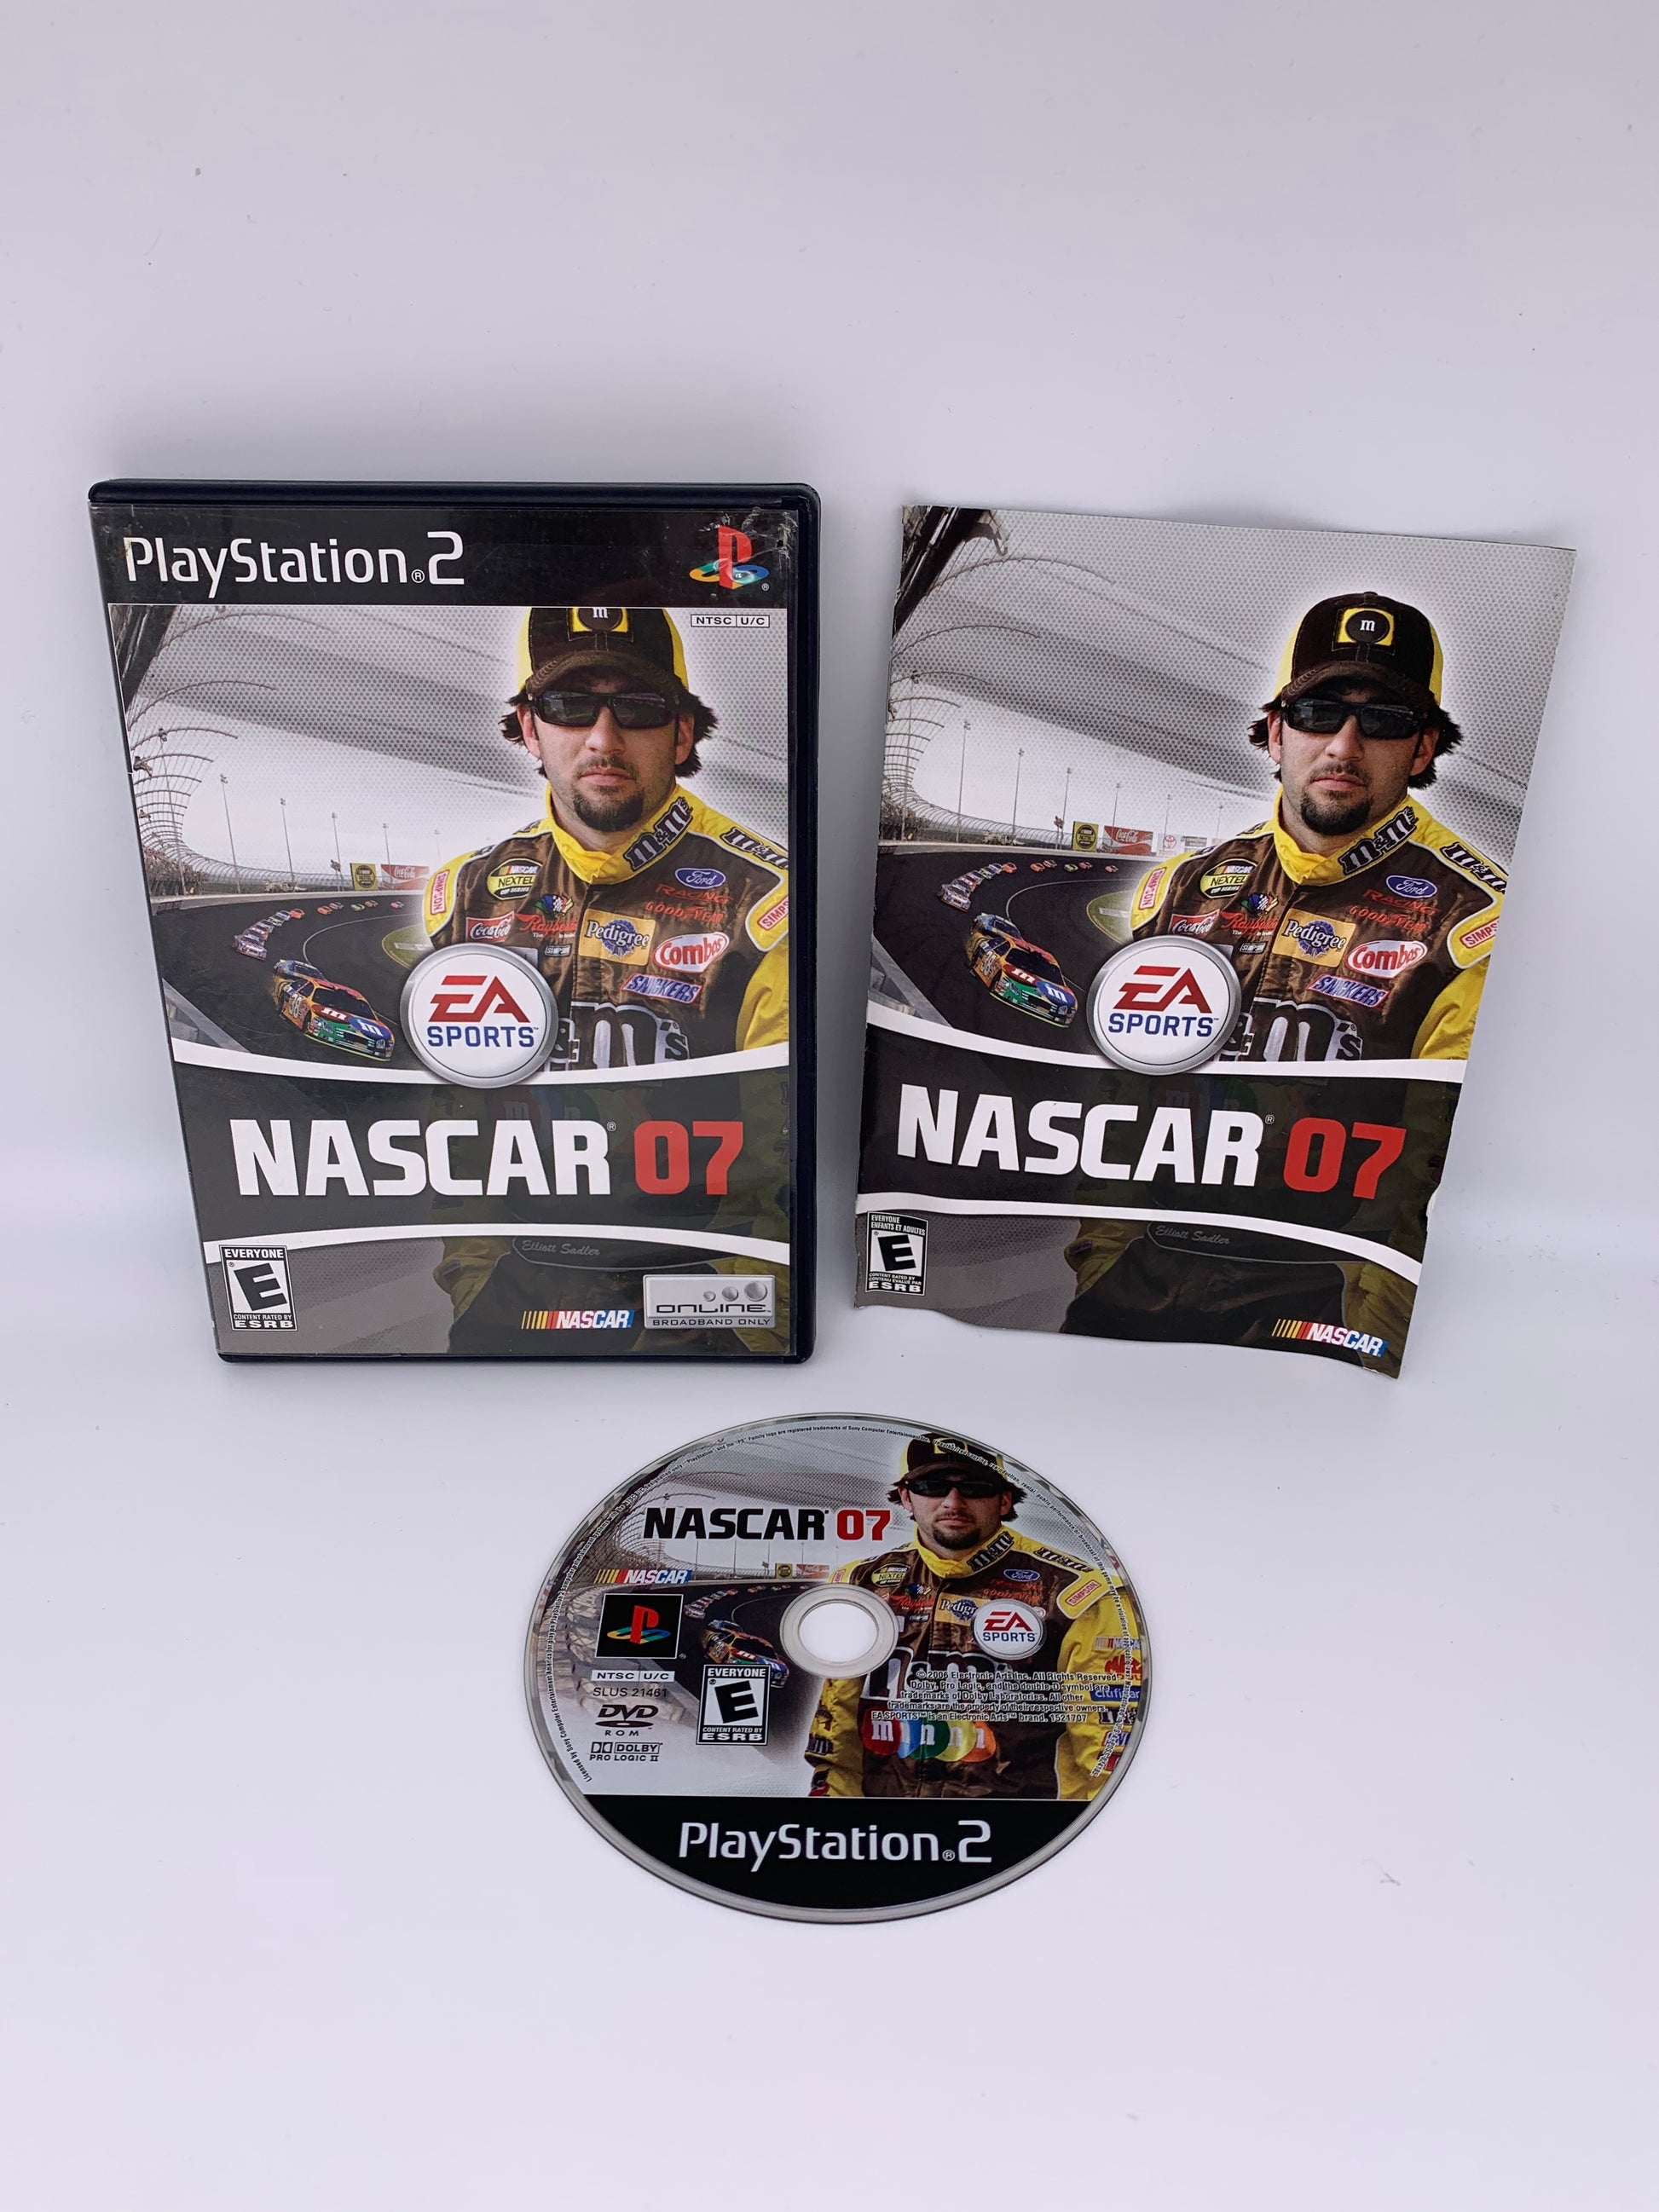 PiXEL-RETRO.COM : SONY PLAYSTATION 2 (PS2) COMPLET CIB BOX MANUAL GAME NTSC NASCAR 07